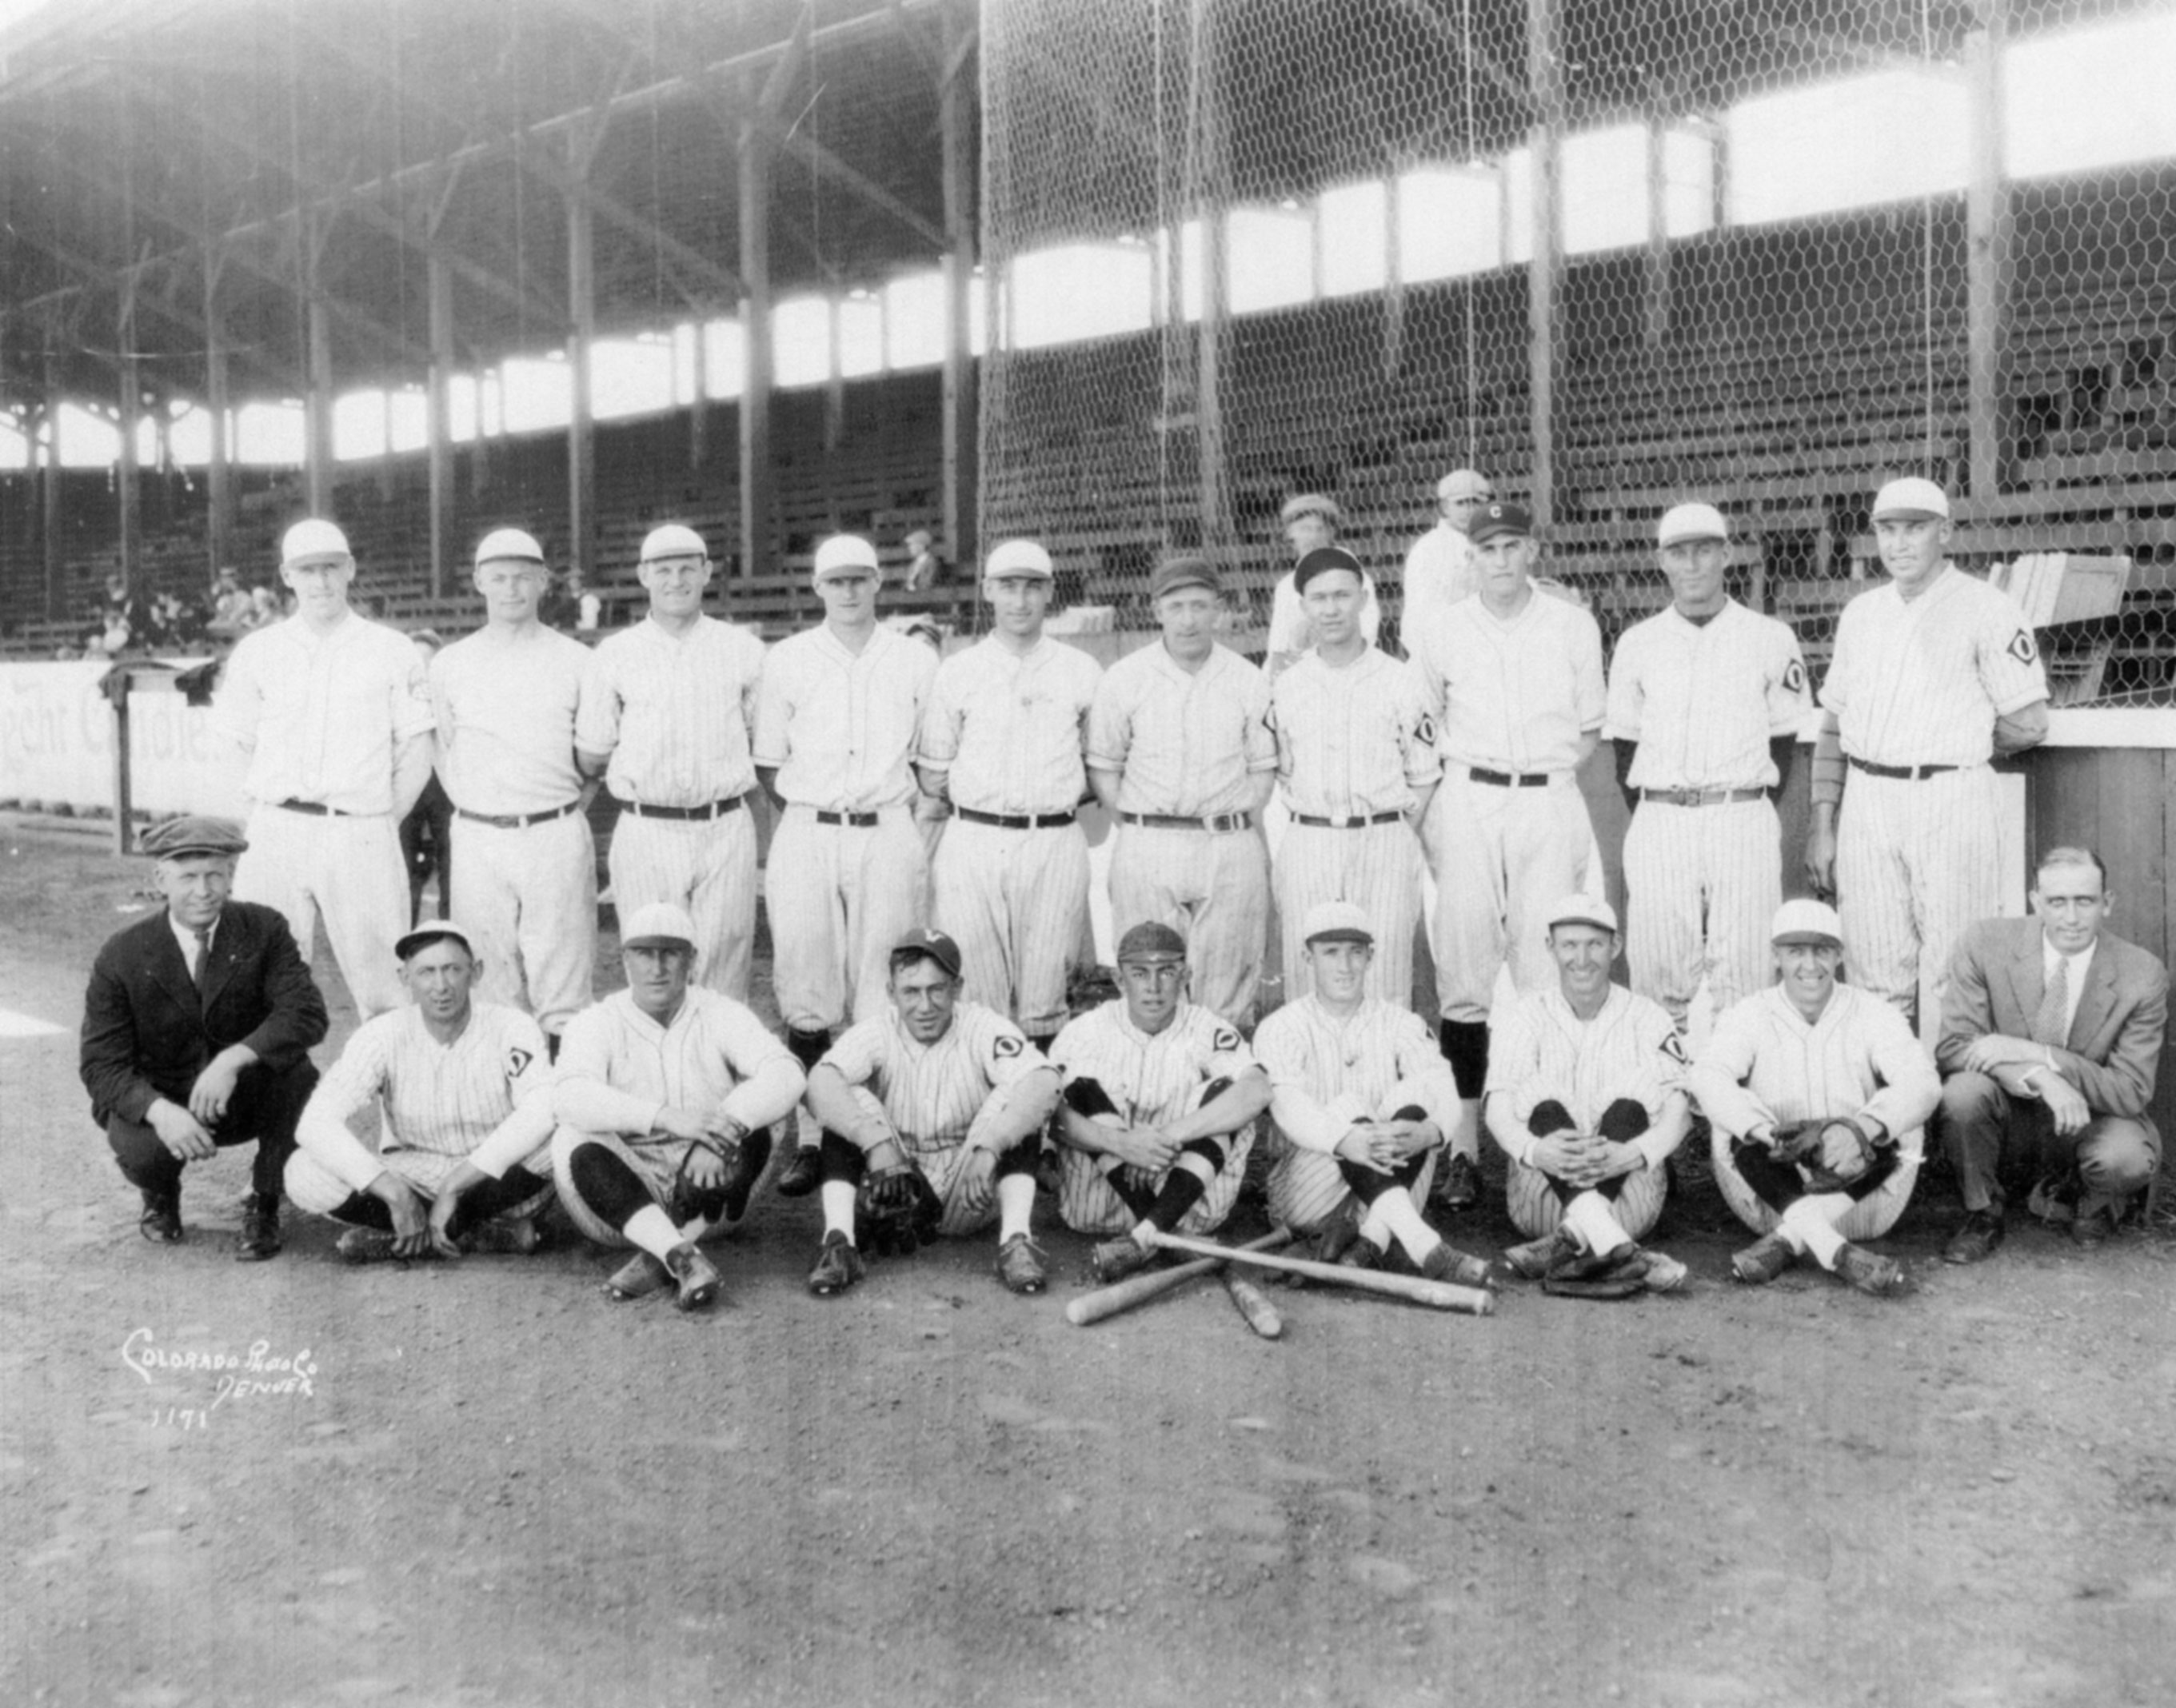 Olathe baseball team at Merchants Park, Denver, 1925